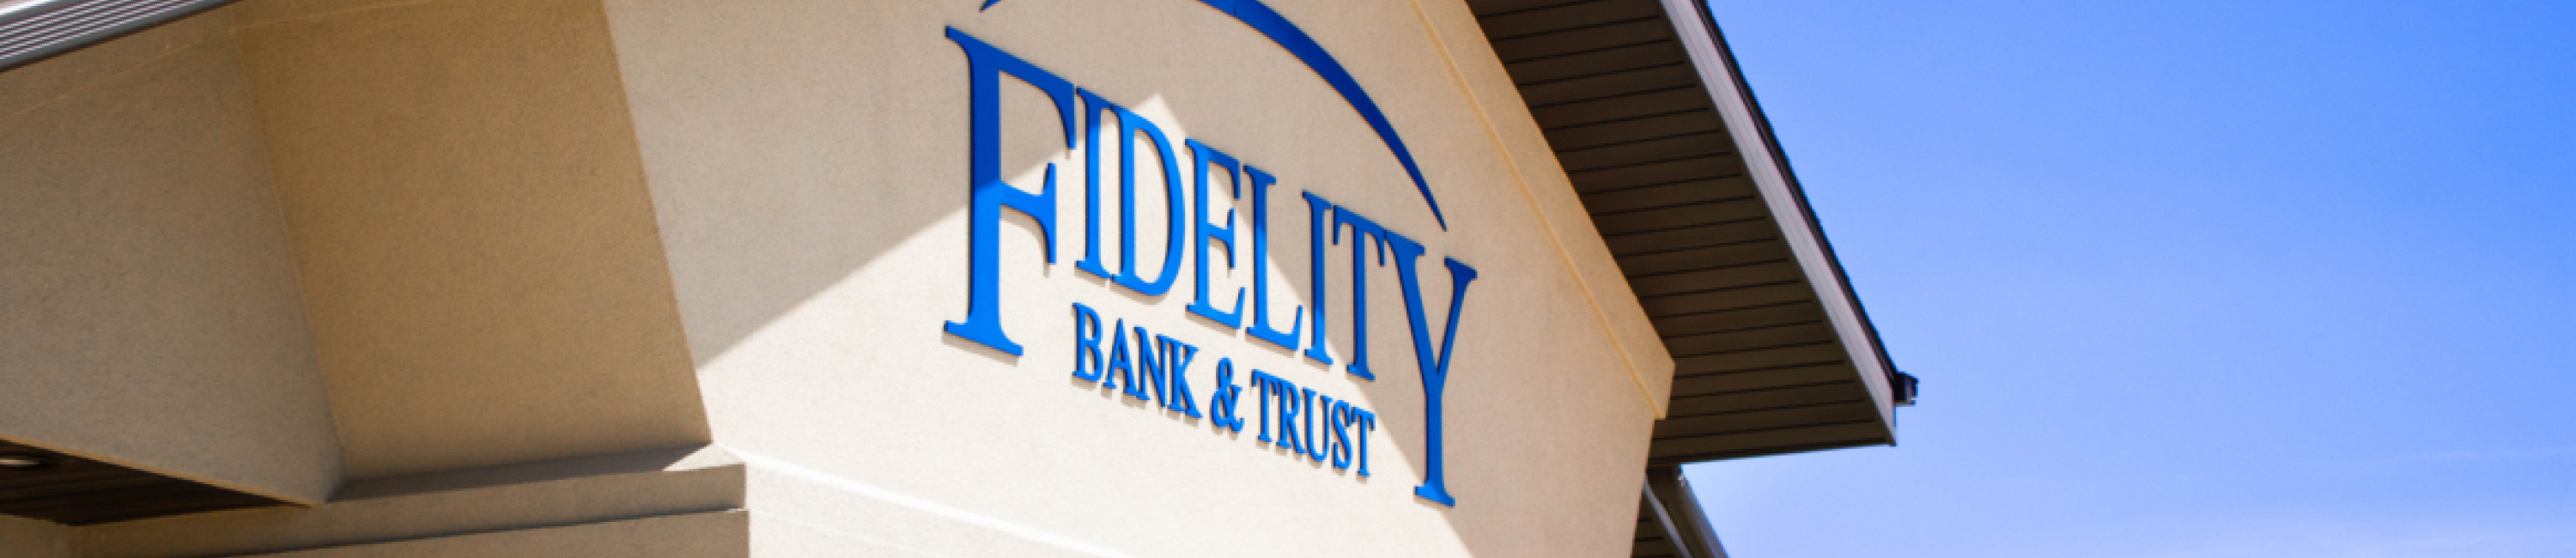 Peosta Branch of Fidelity Bank & Trust